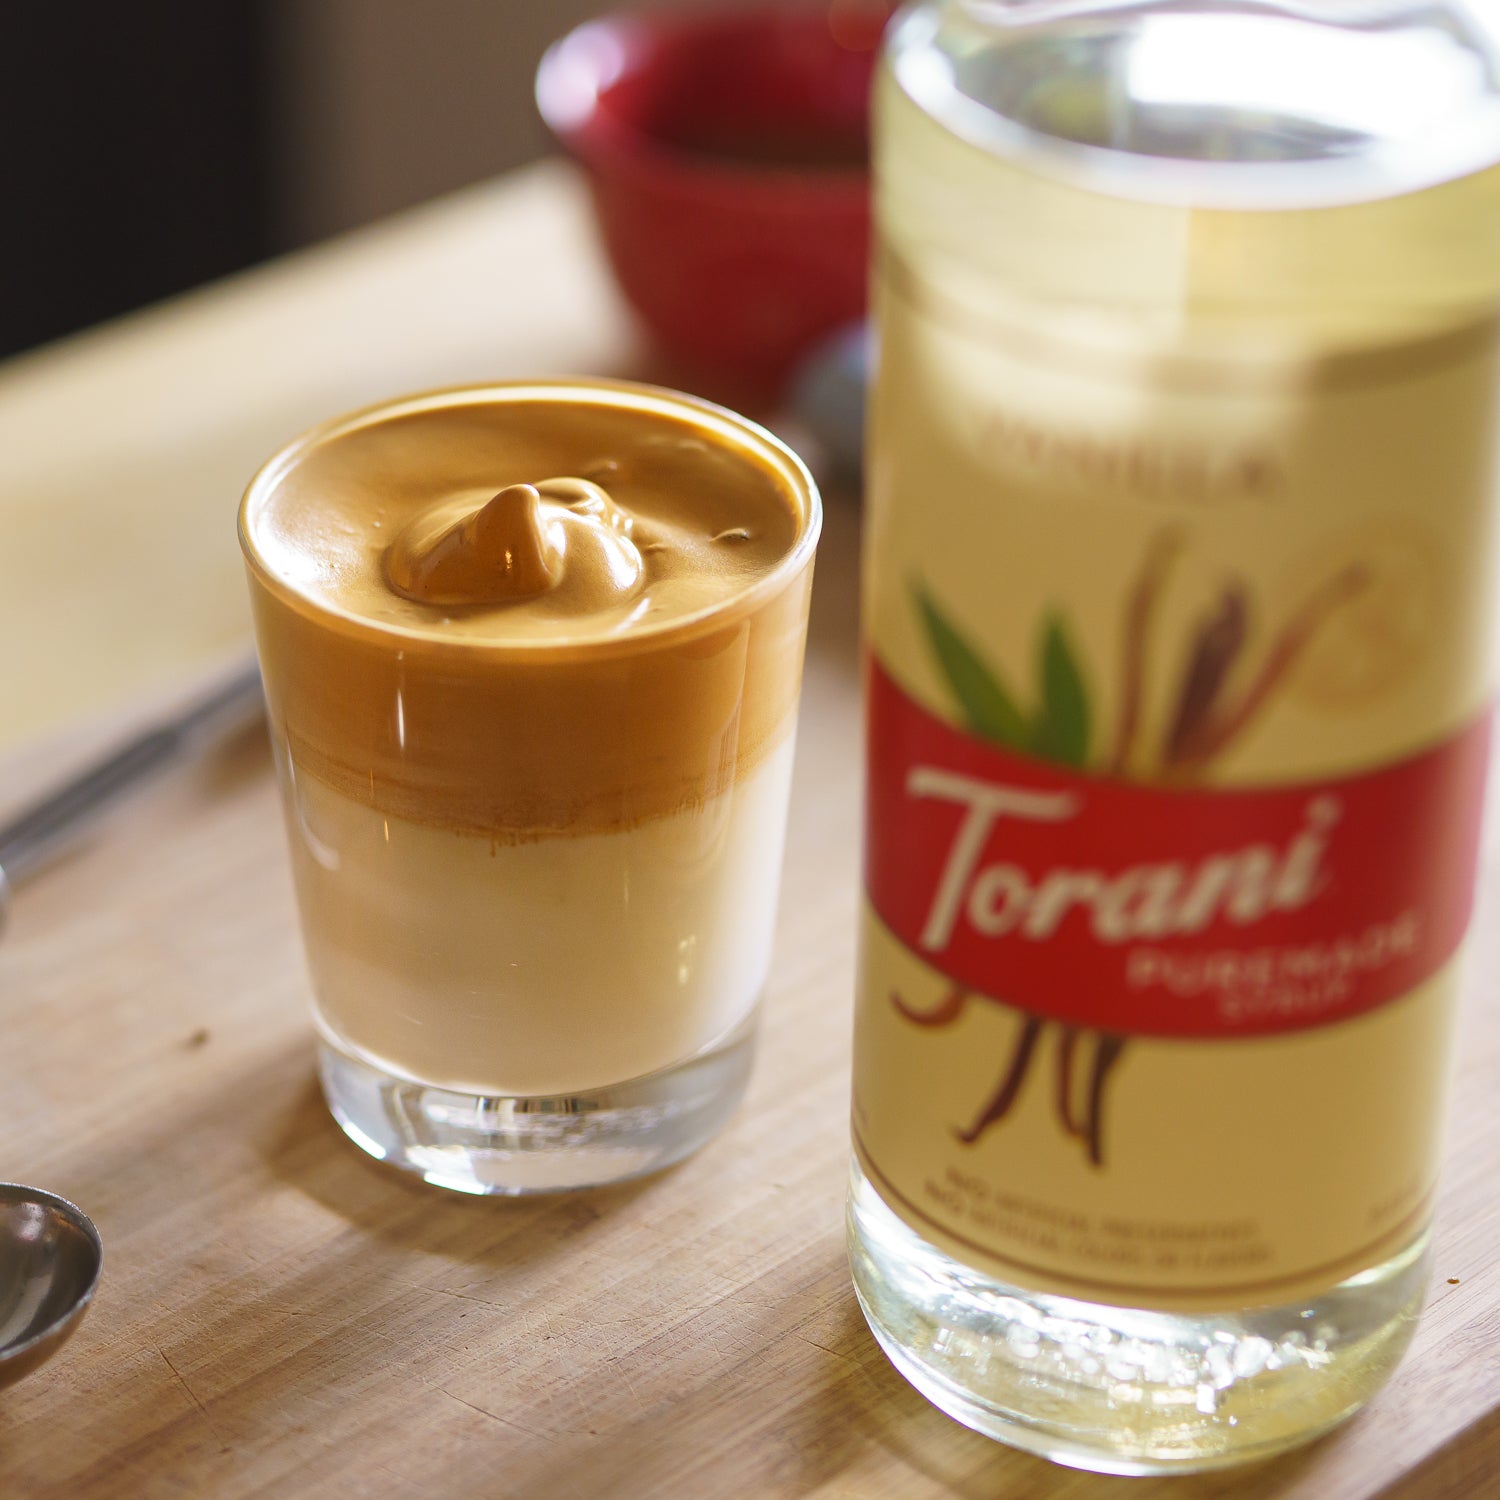 Torani Puremade Flavor Syrup - 750ml Plastic Bottle: Vanilla